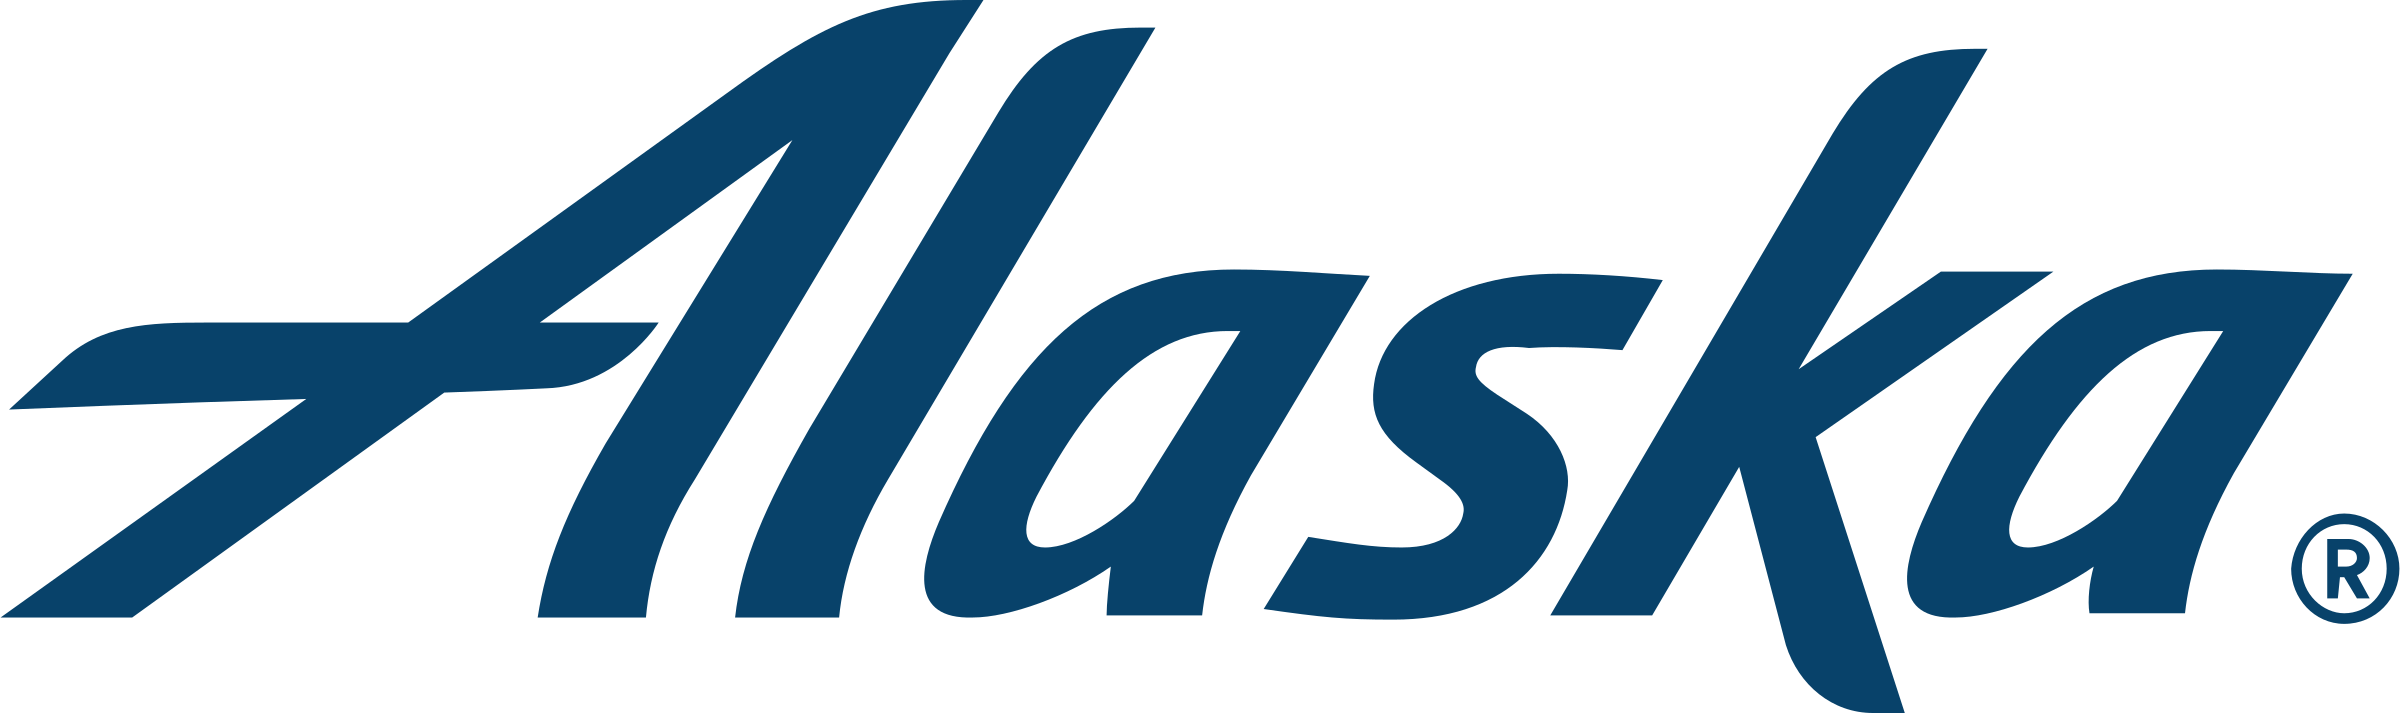 Open - Alaska Airlines Logo (2000x611), Png Download